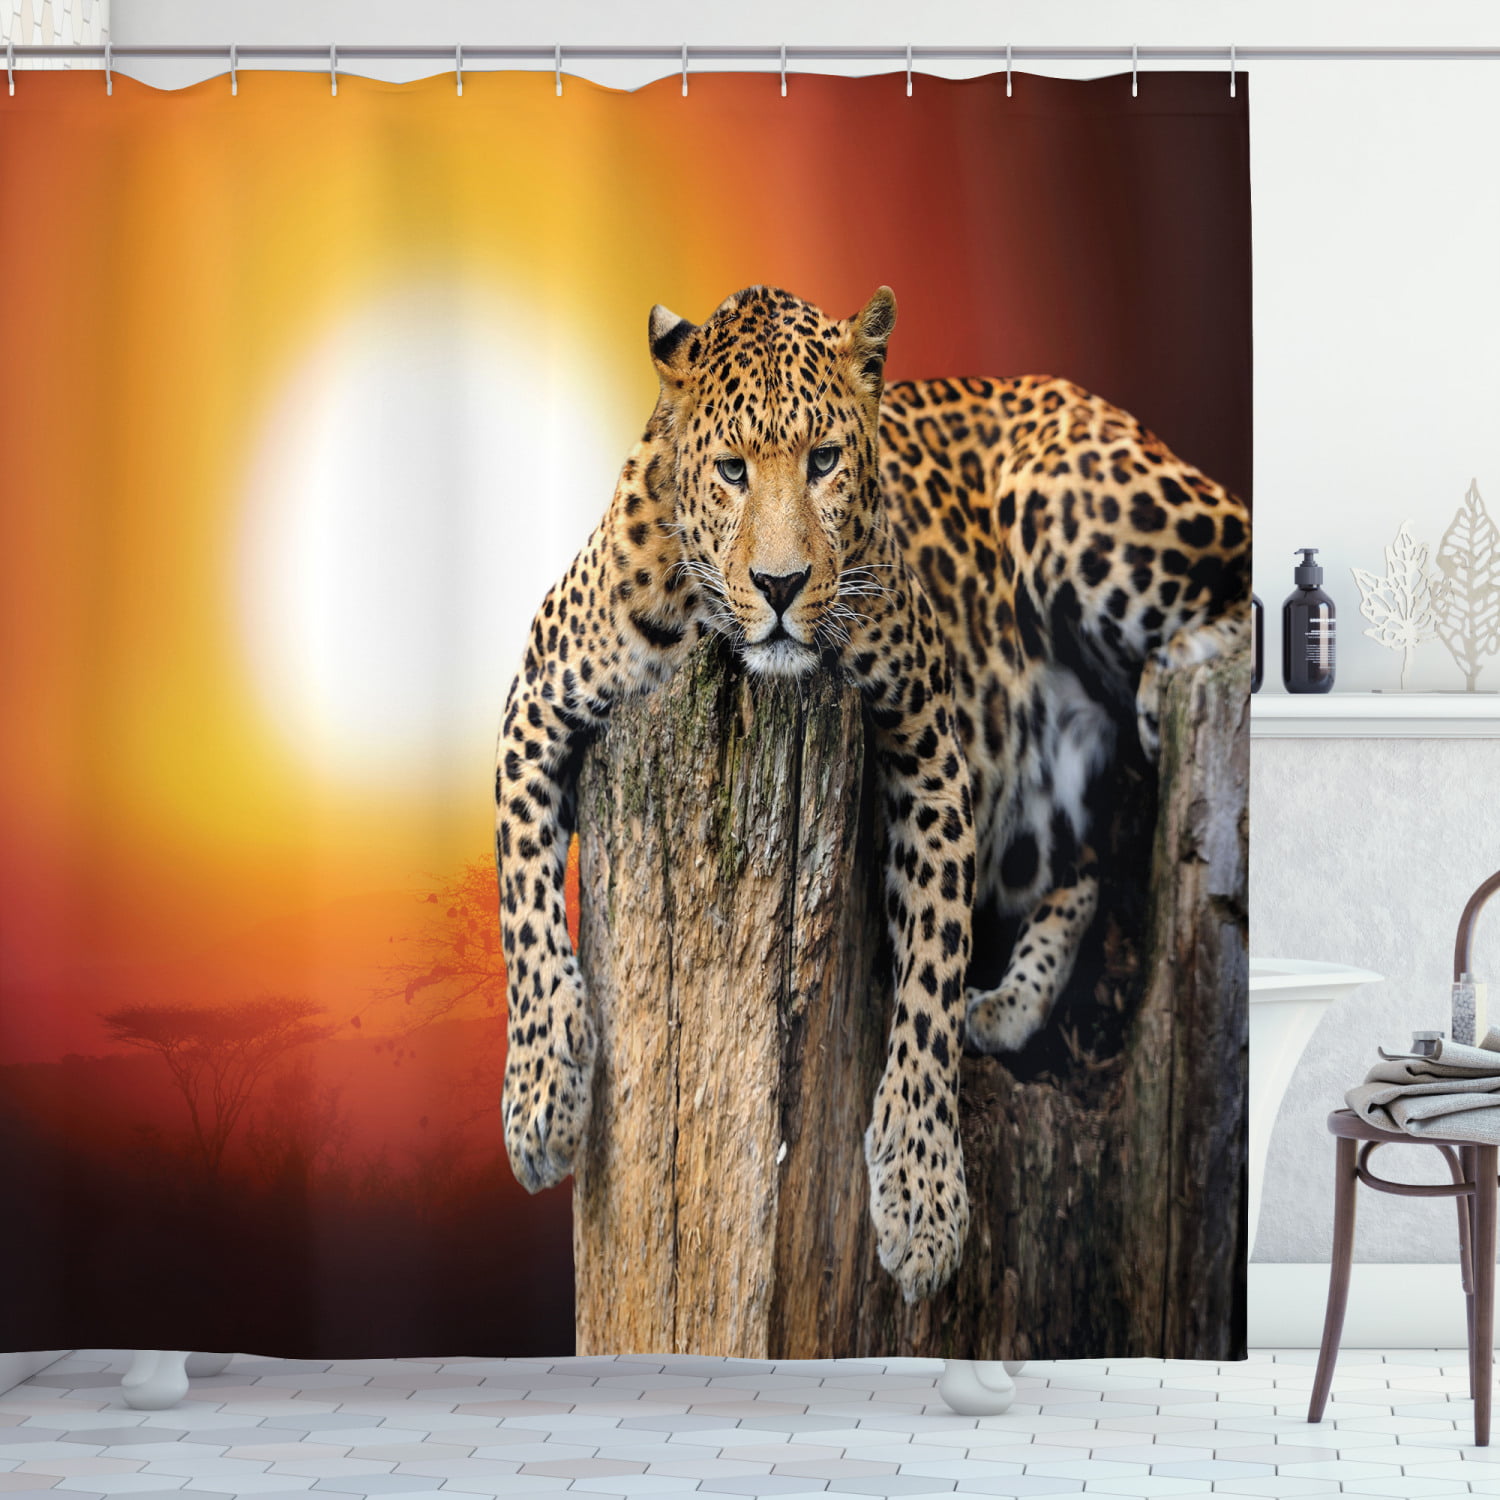 Tiger Leopard Lion Portraits Shower Curtain Set Bathroom Waterproof Fabric Hooks 